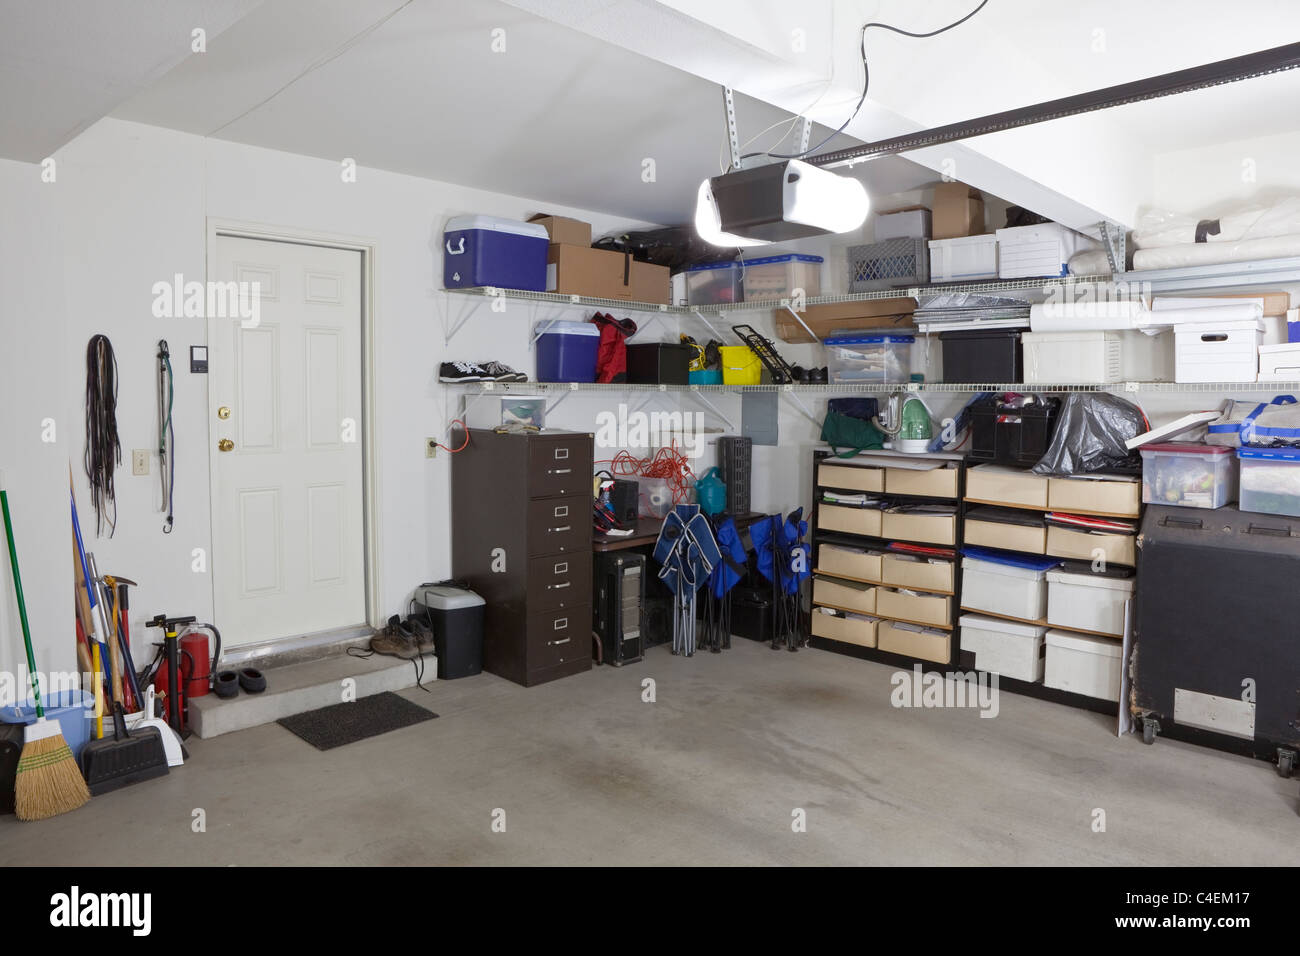 Untidy suburban garage with shelves and storage Stock Photo - Alamy